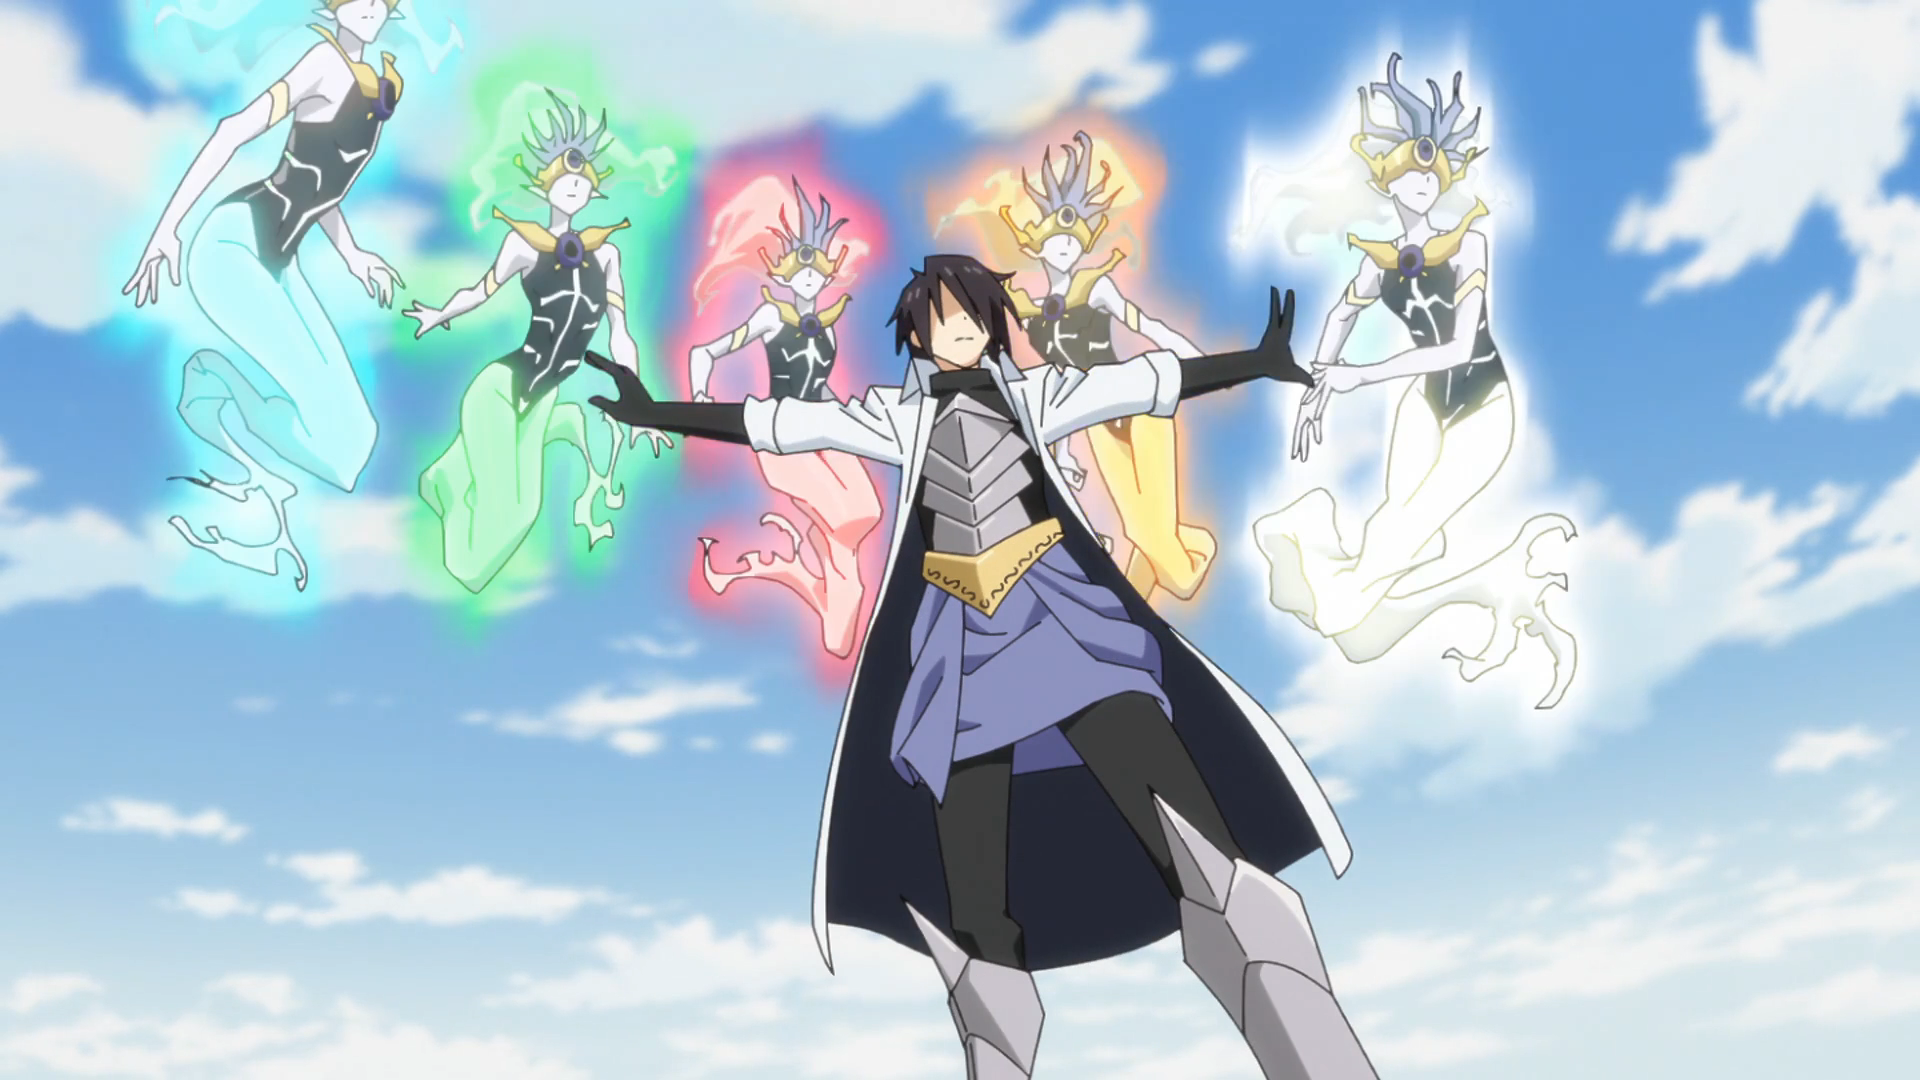 High-Spirited Hero with Elemental Powers / Anime 5 by sauliukazz on  DeviantArt